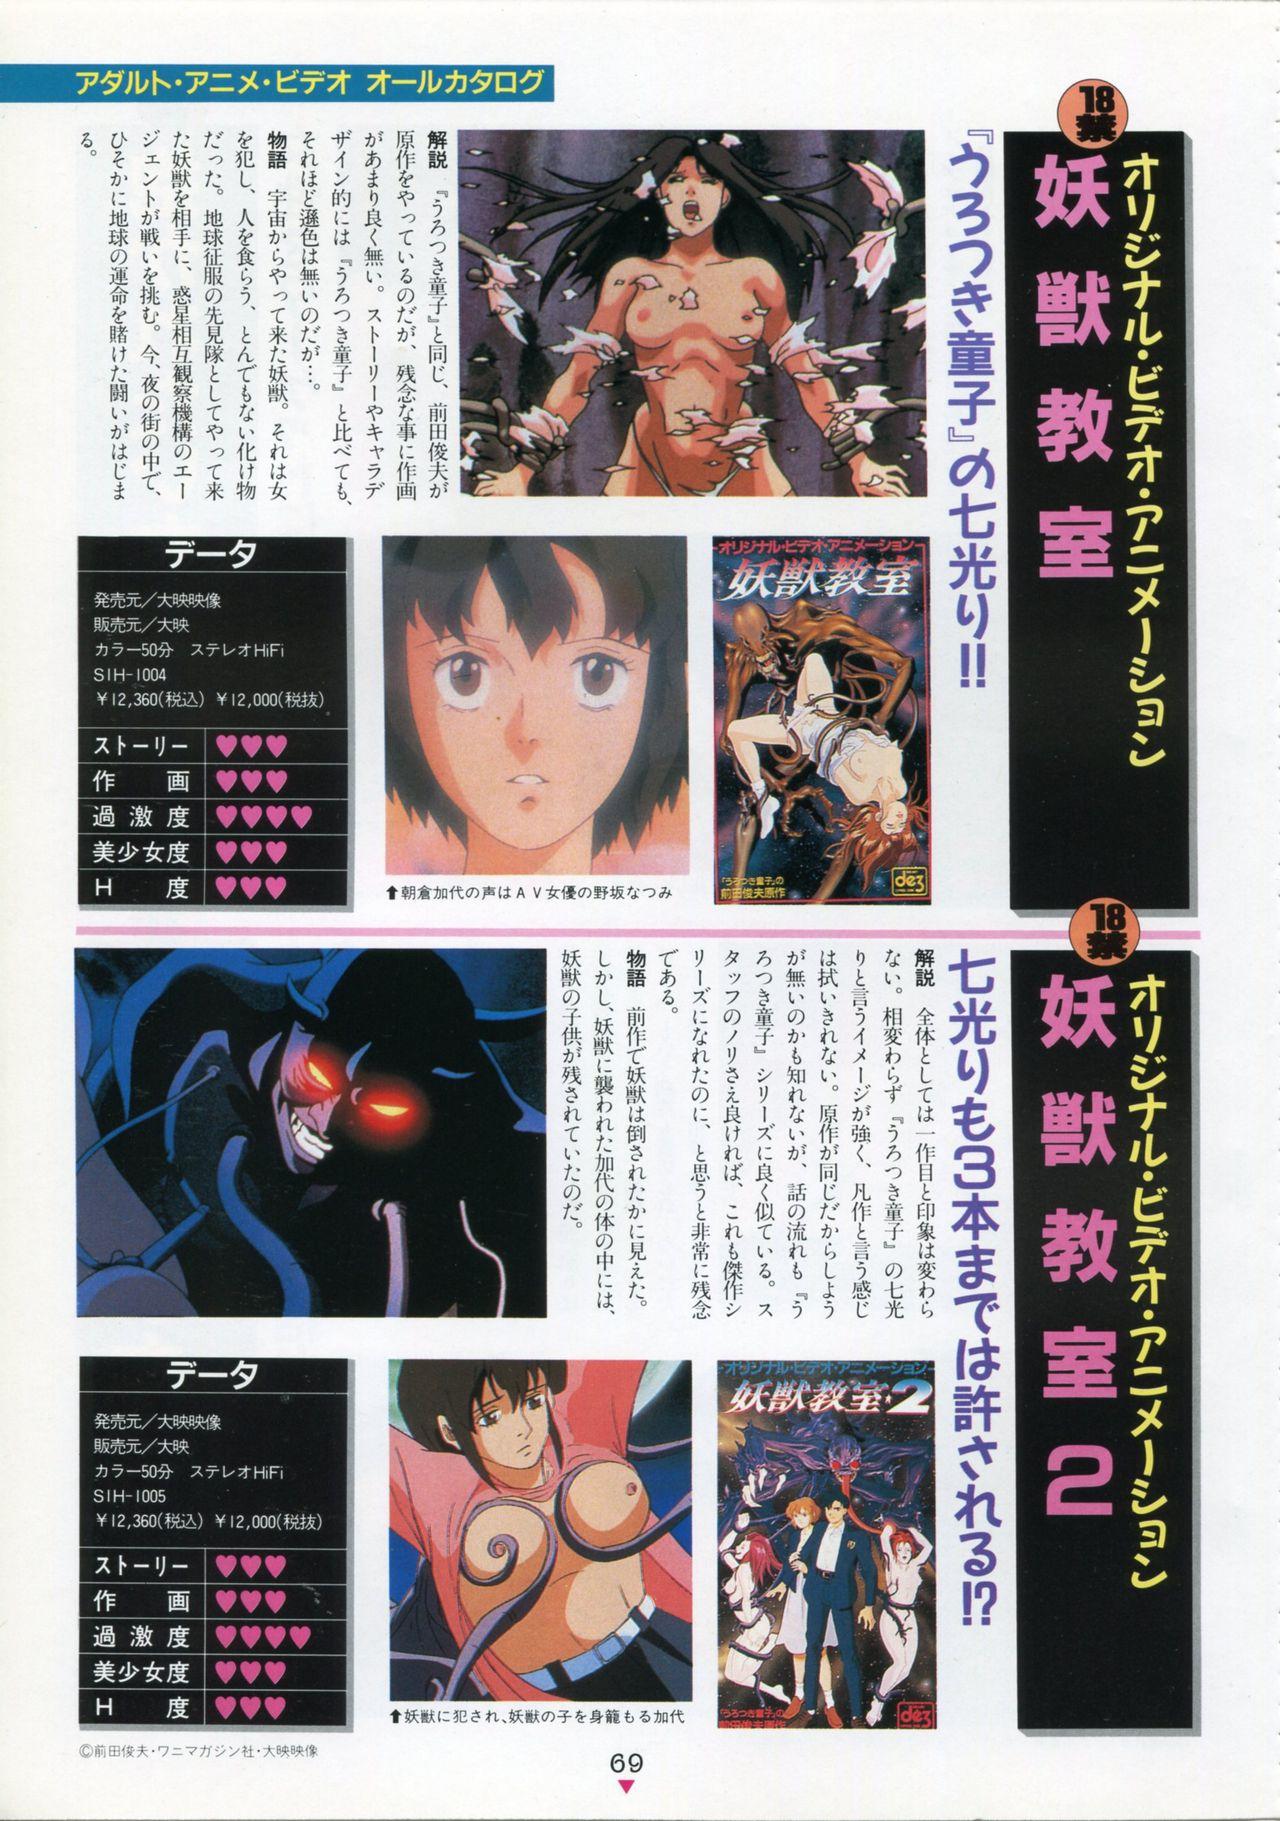 Bishoujo Anime Daizenshuu - Adult Animation Video Catalog 1991 64